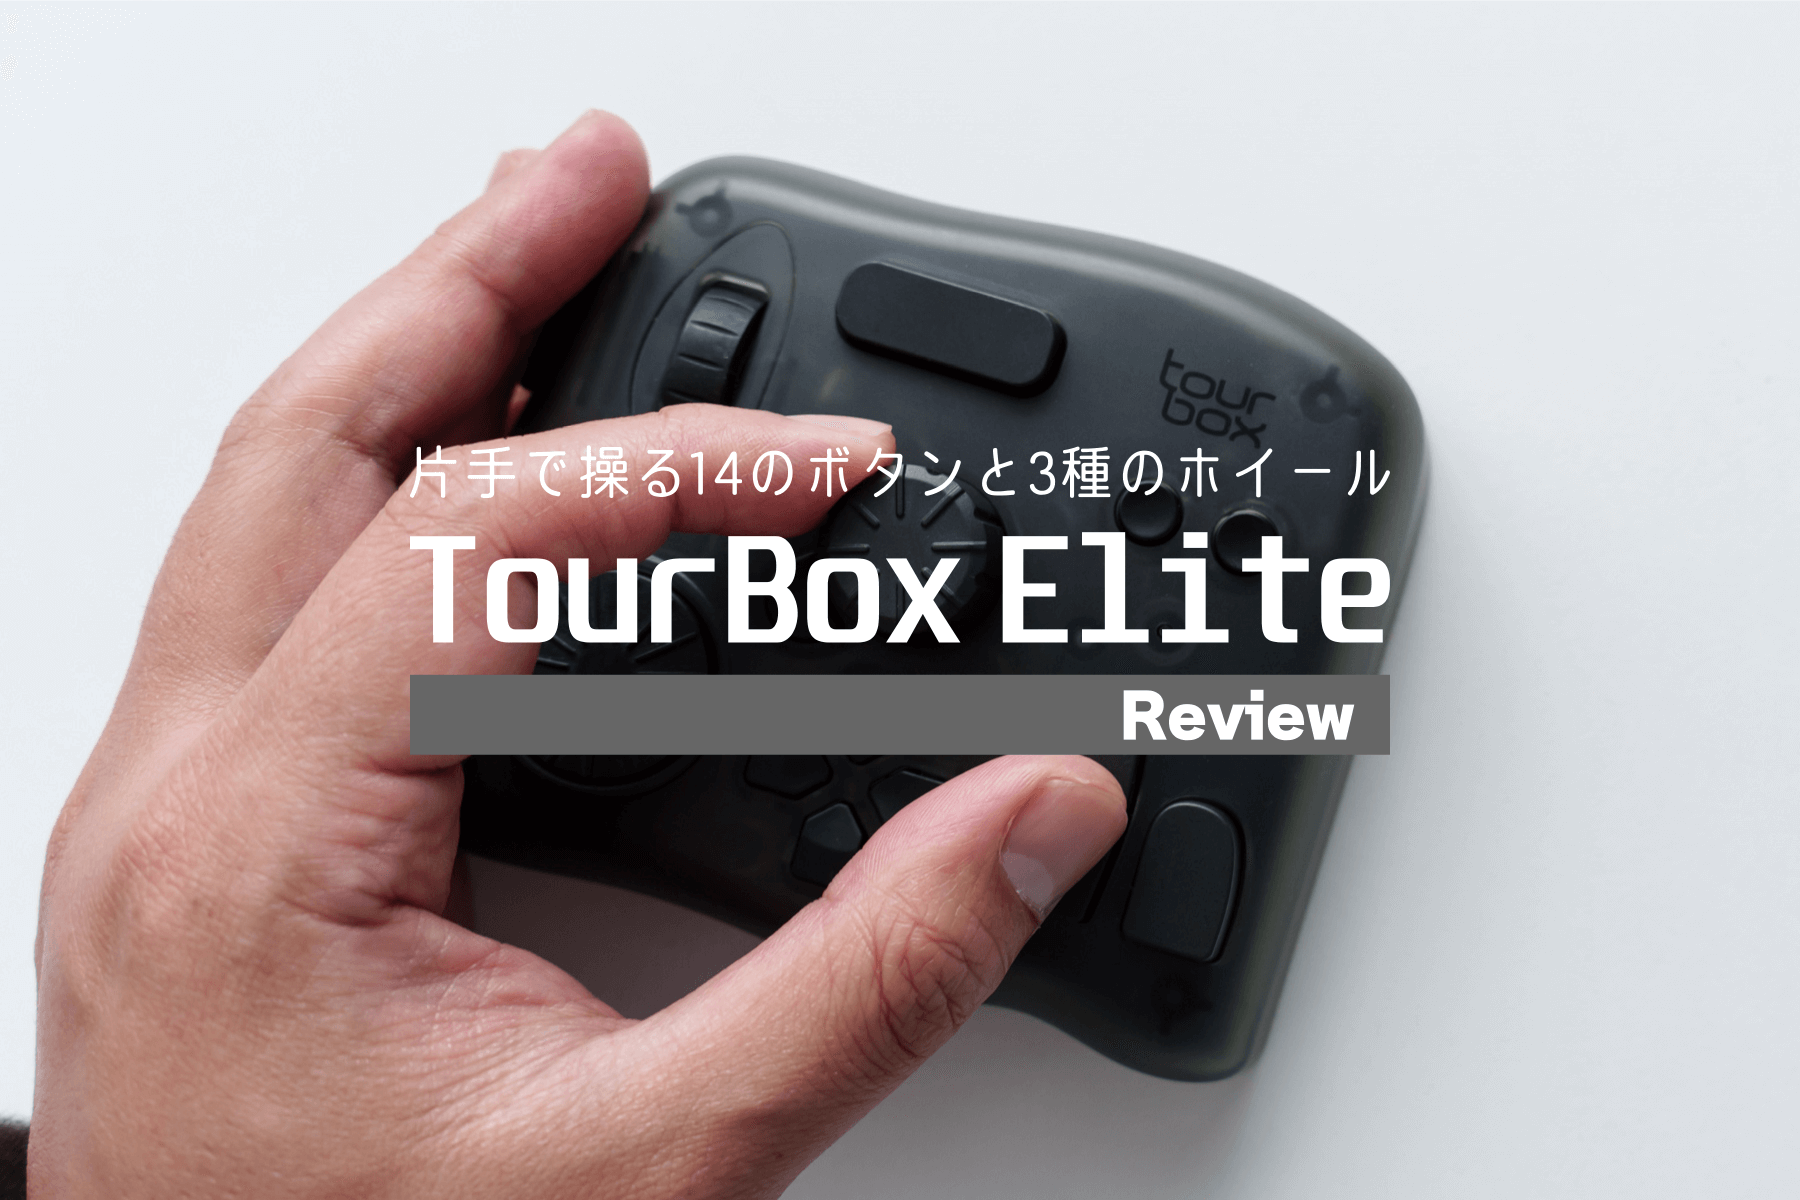 TourBox Elite 先行レビュー。これは使いやすい！左手デバイスの直感的な操作で作業効率がアップする